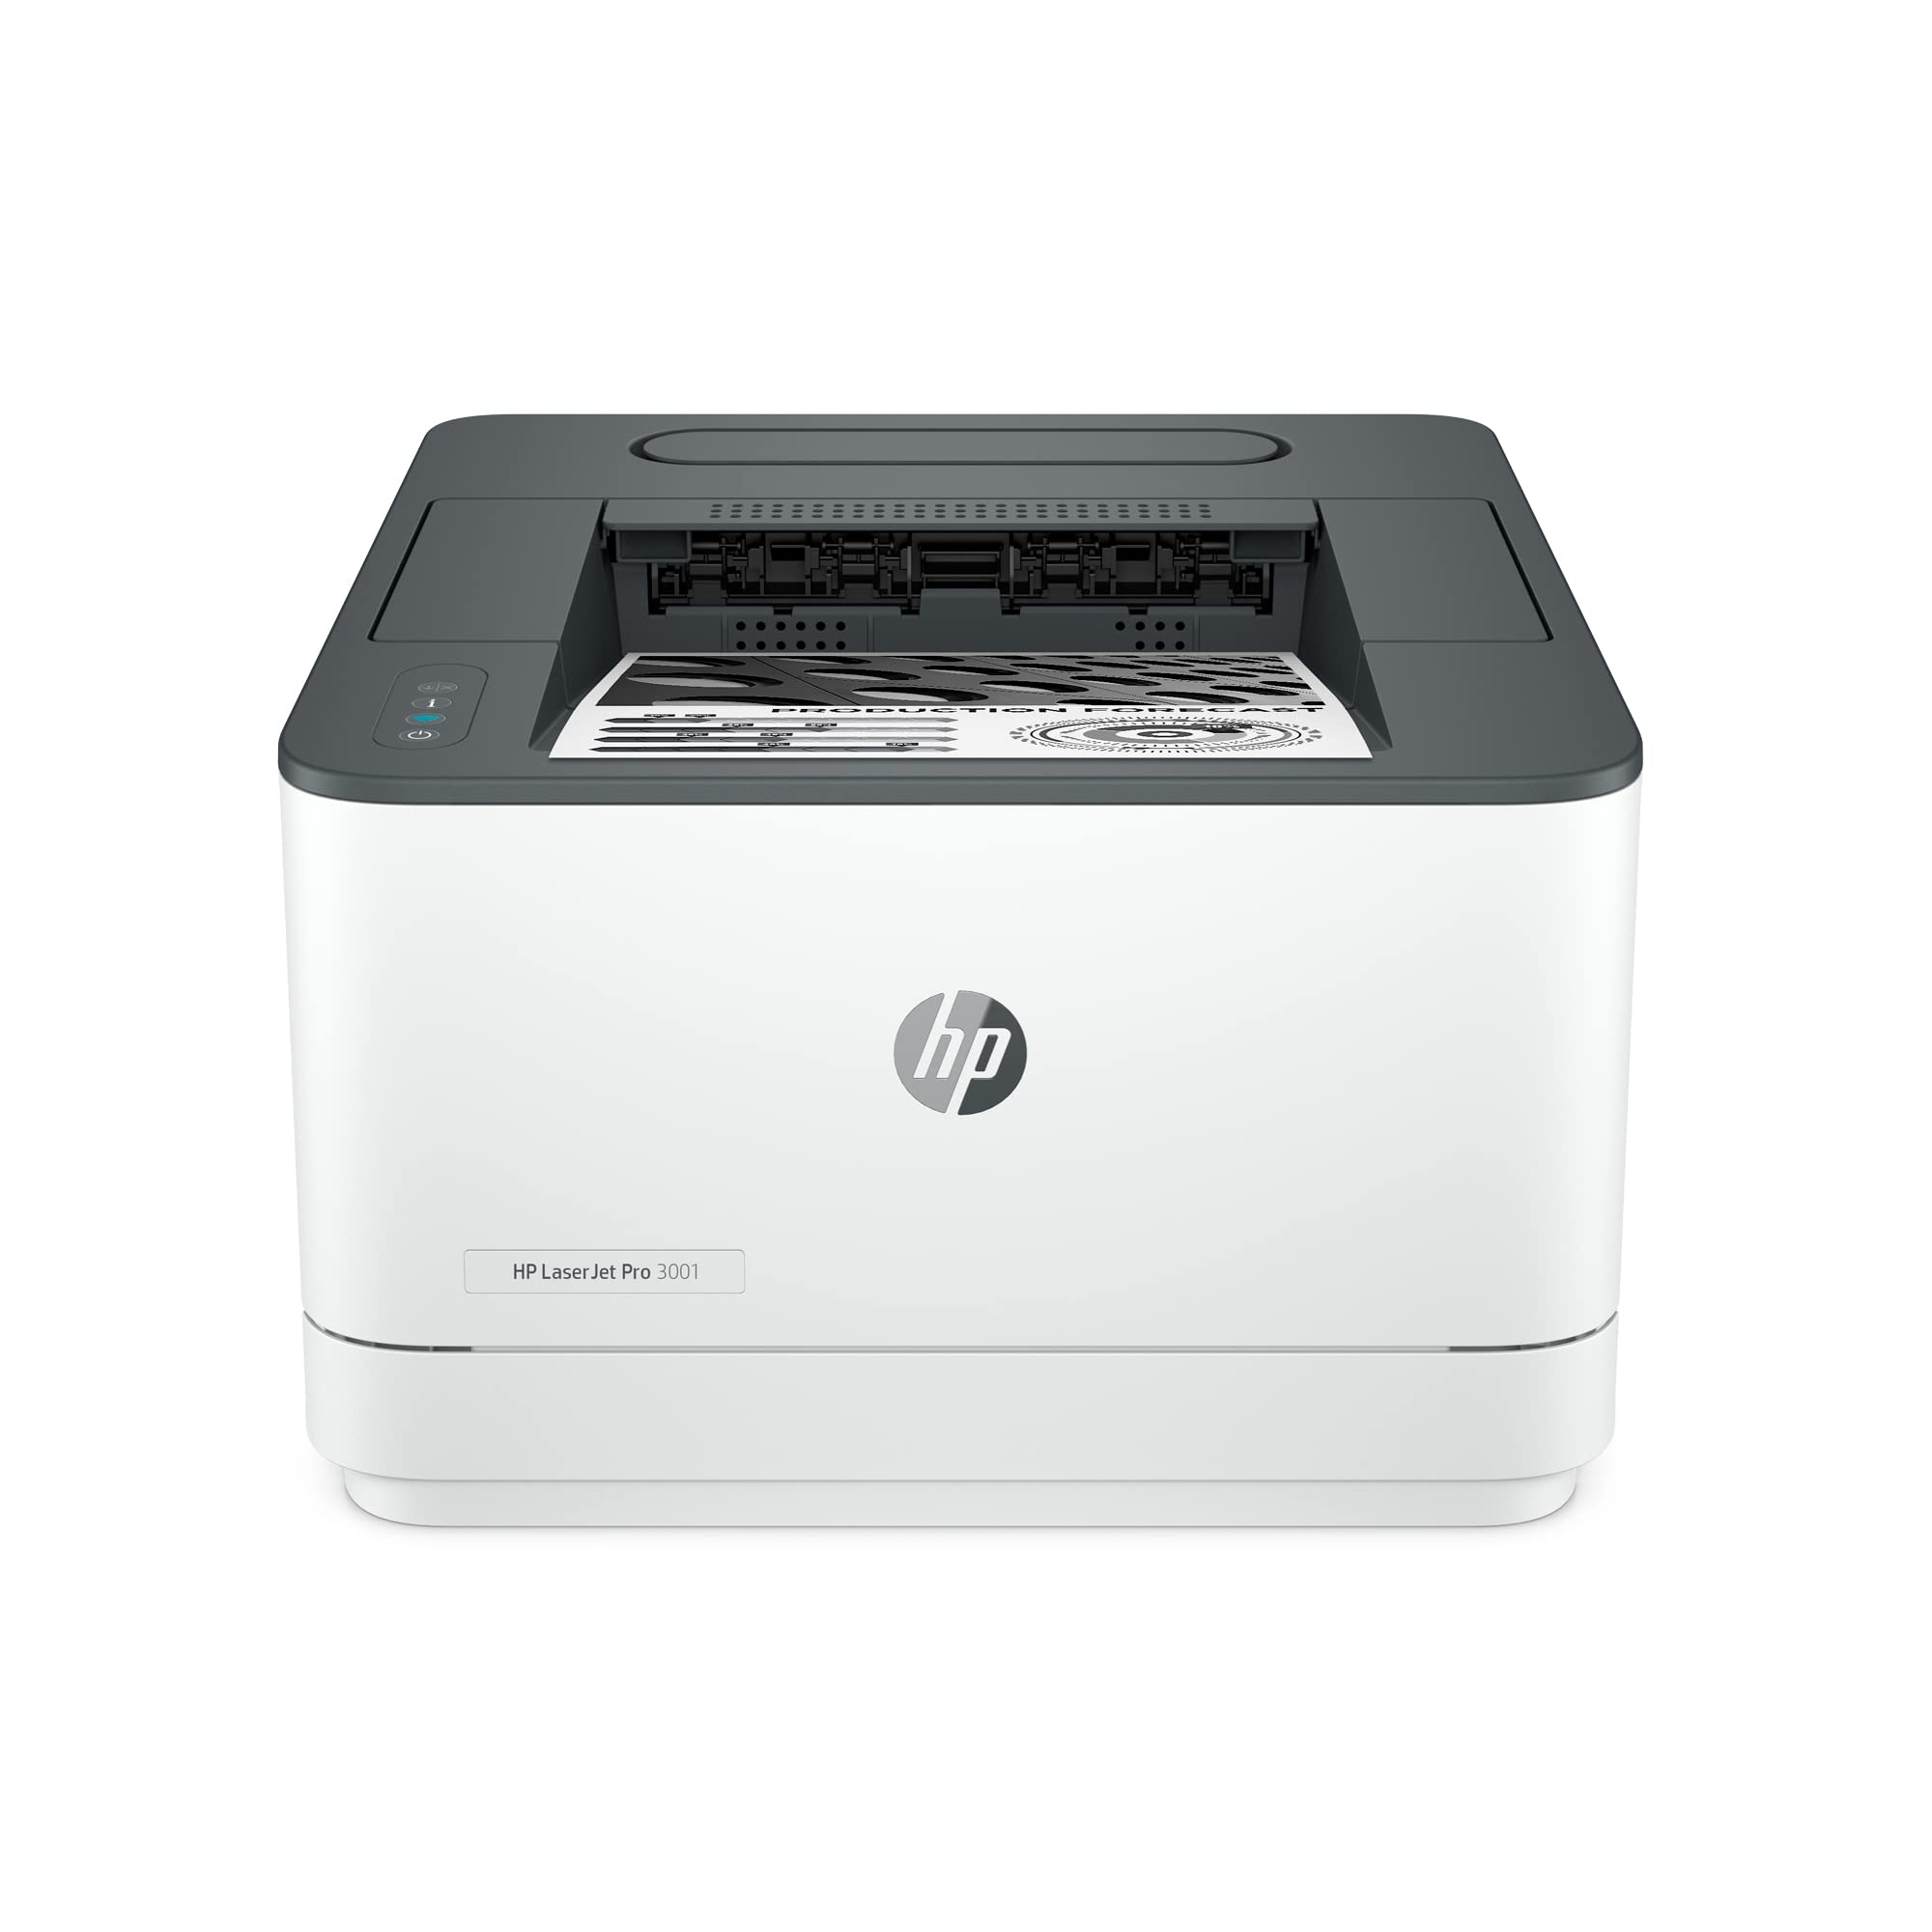 HP Impressora Laserjet Pro 4001ne preto e branco com + ...